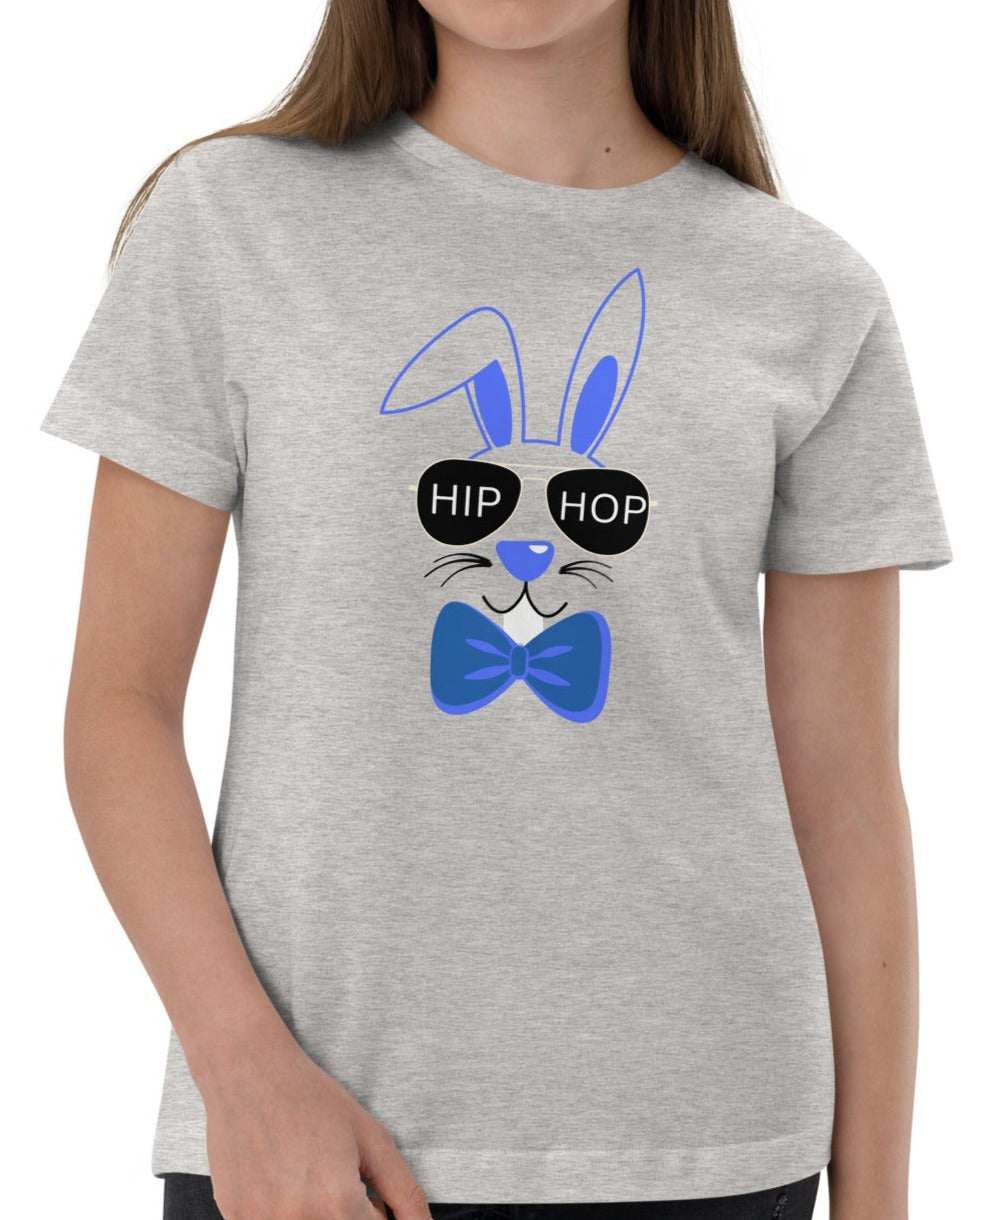 Hip Hop Blue Bunny Youth Tee XS-XL - On the Go with Princess O